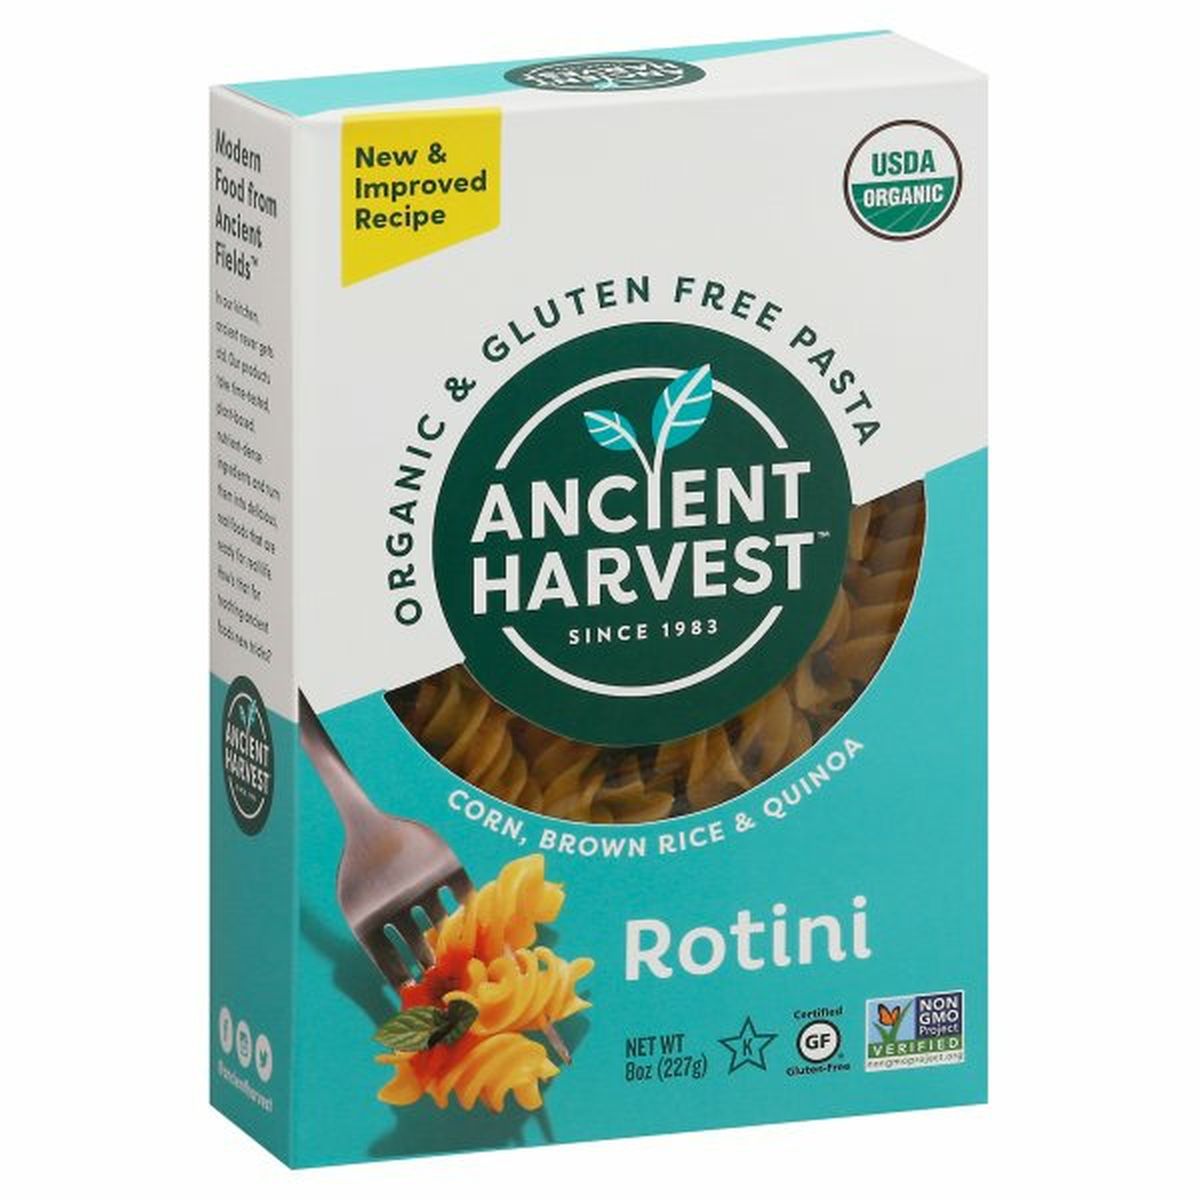 Calories in Ancient Harvest Rotini